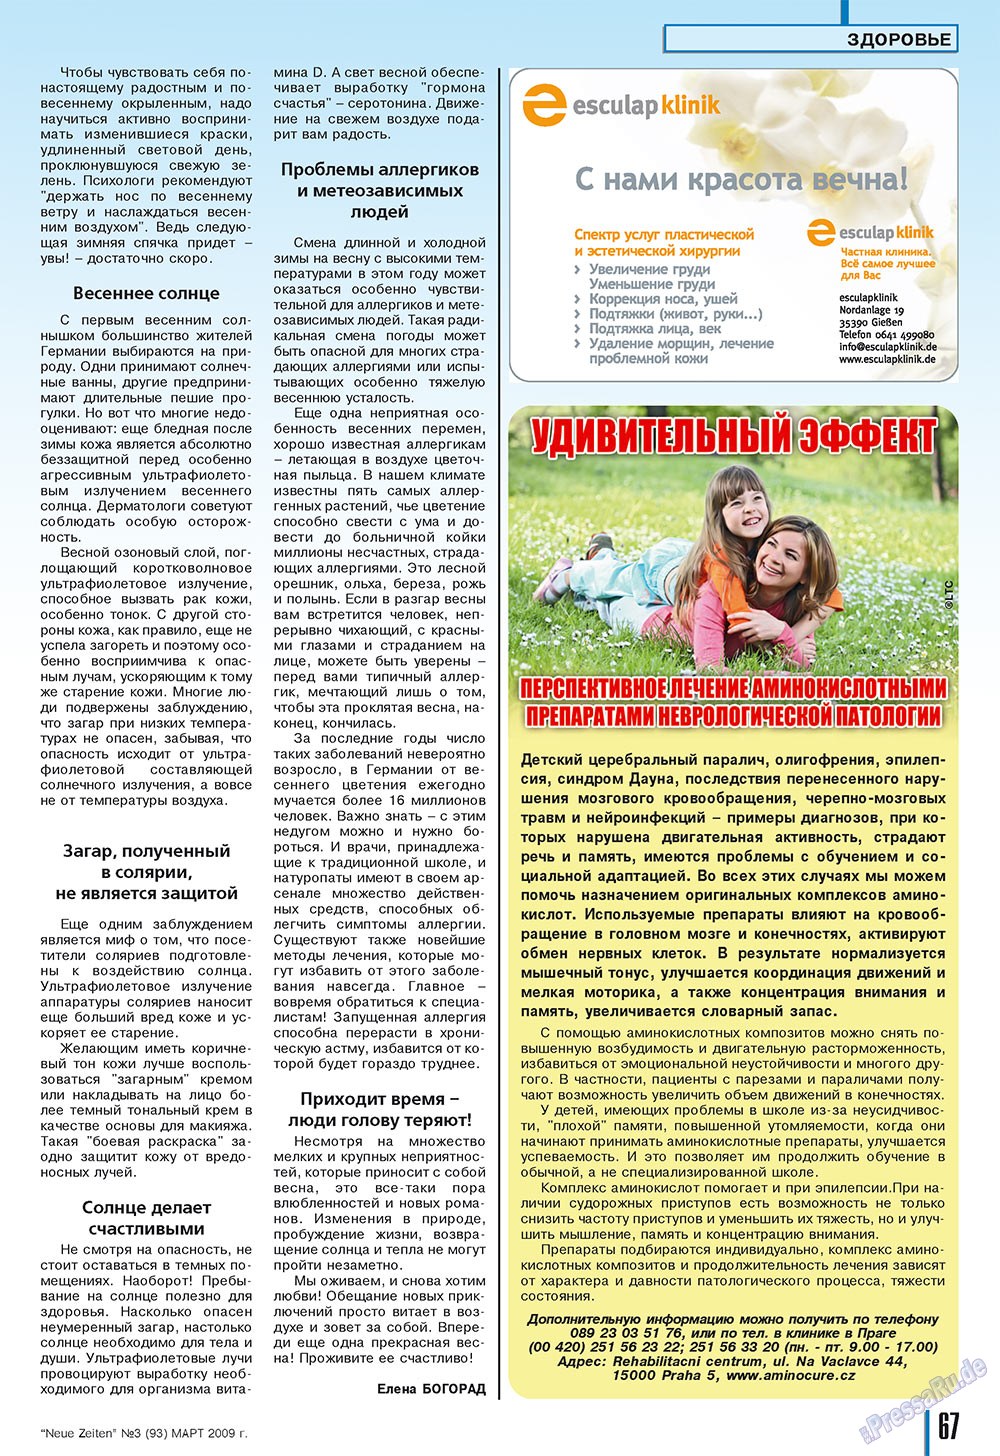 Neue Zeiten (журнал). 2009 год, номер 3, стр. 67